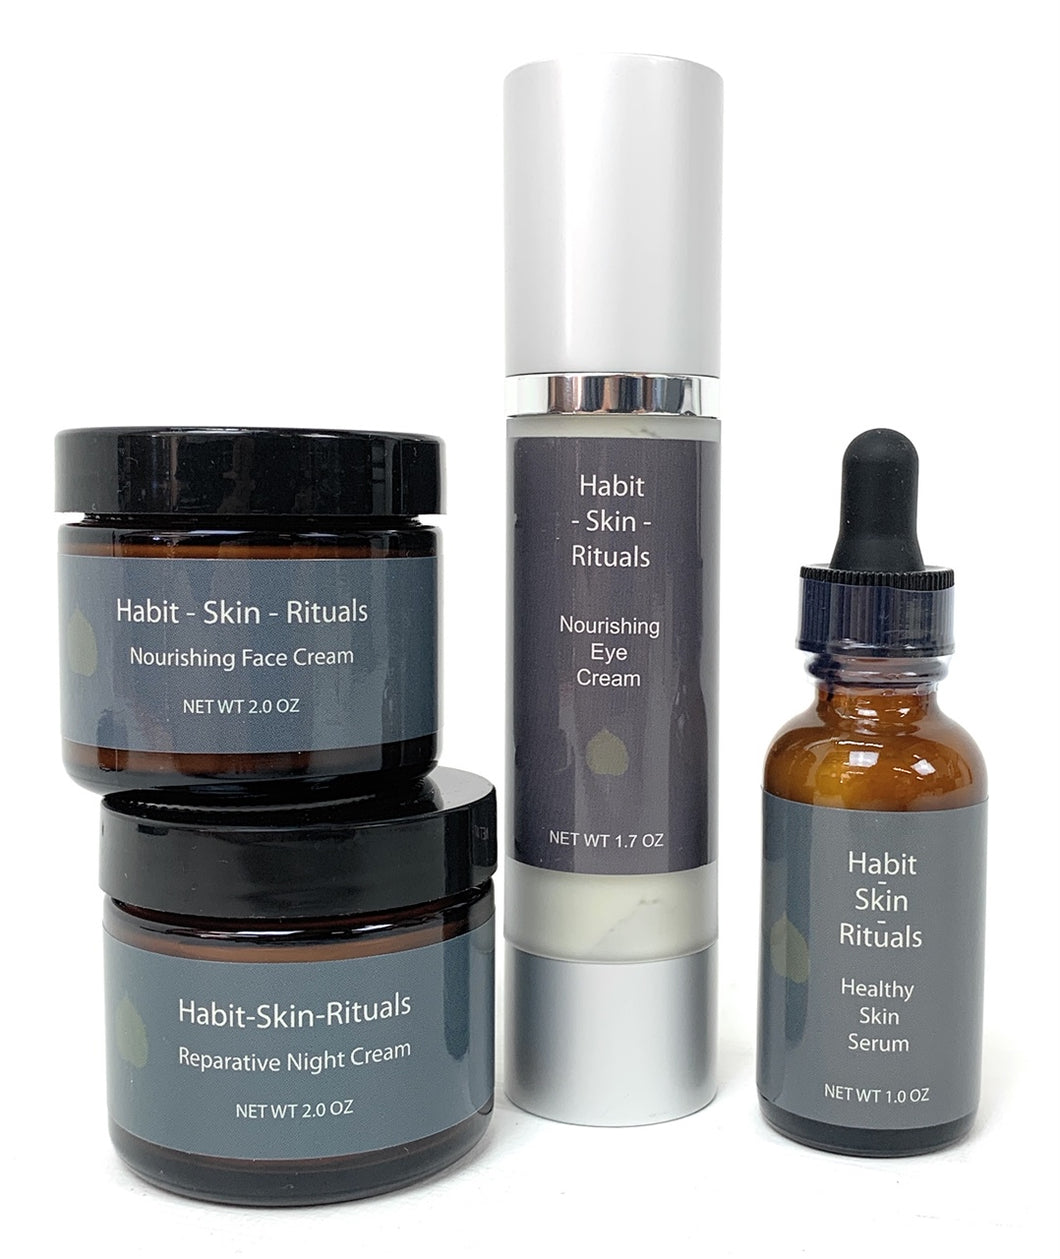 Habit-Skin-Rituals Skin Care Bundle With Face Cream, Night Cream, Skin Serum and Eye Cream